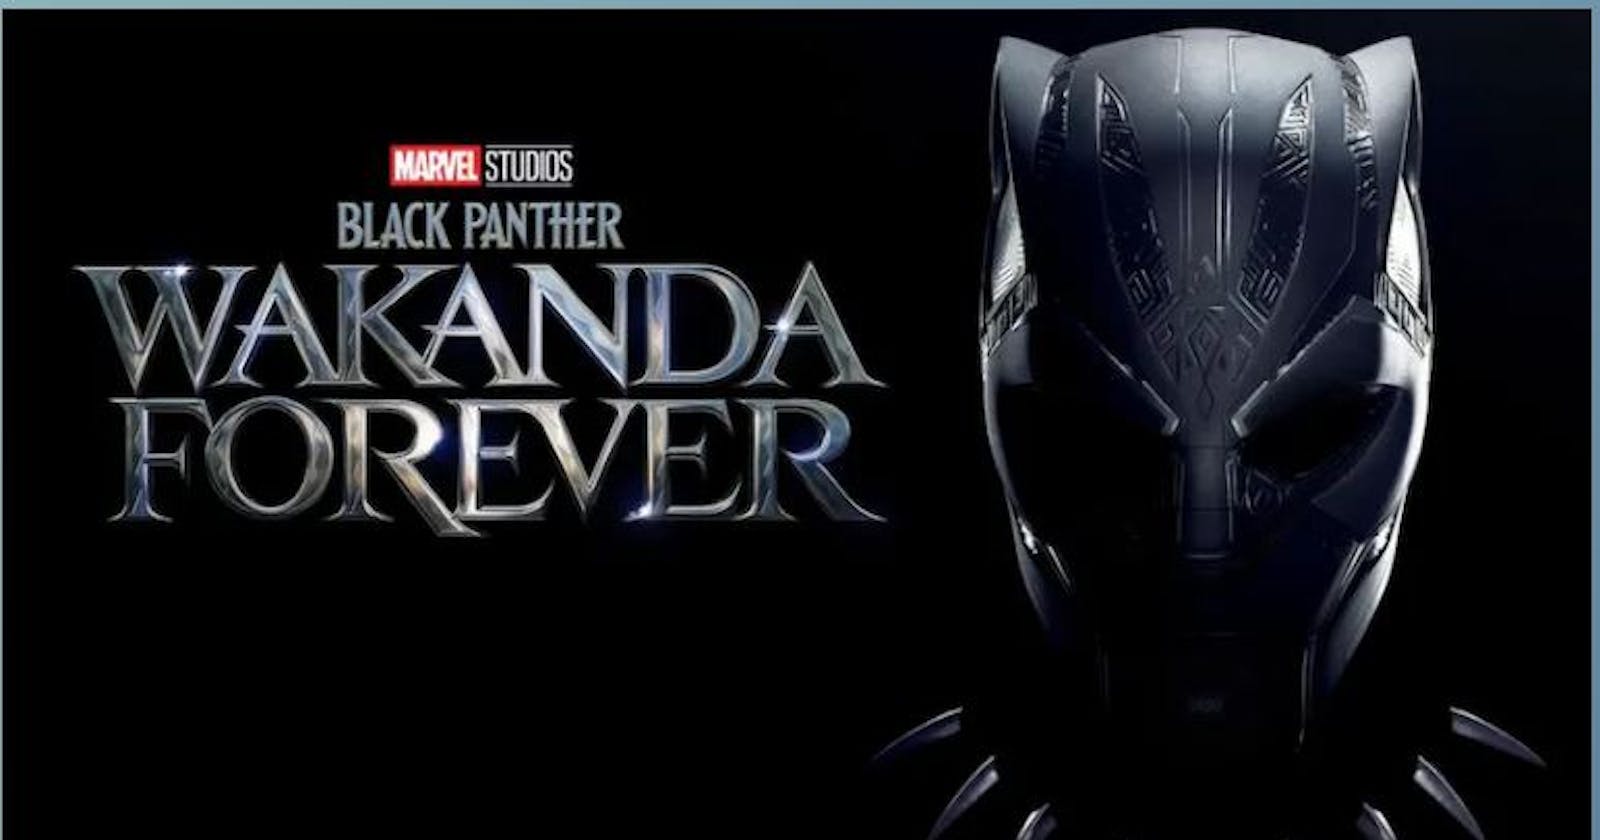 ((+VOSTFR+)) Voir Black Panther 2 Wakanda Forever (2022) Streaming VF [FR]  Gratuit